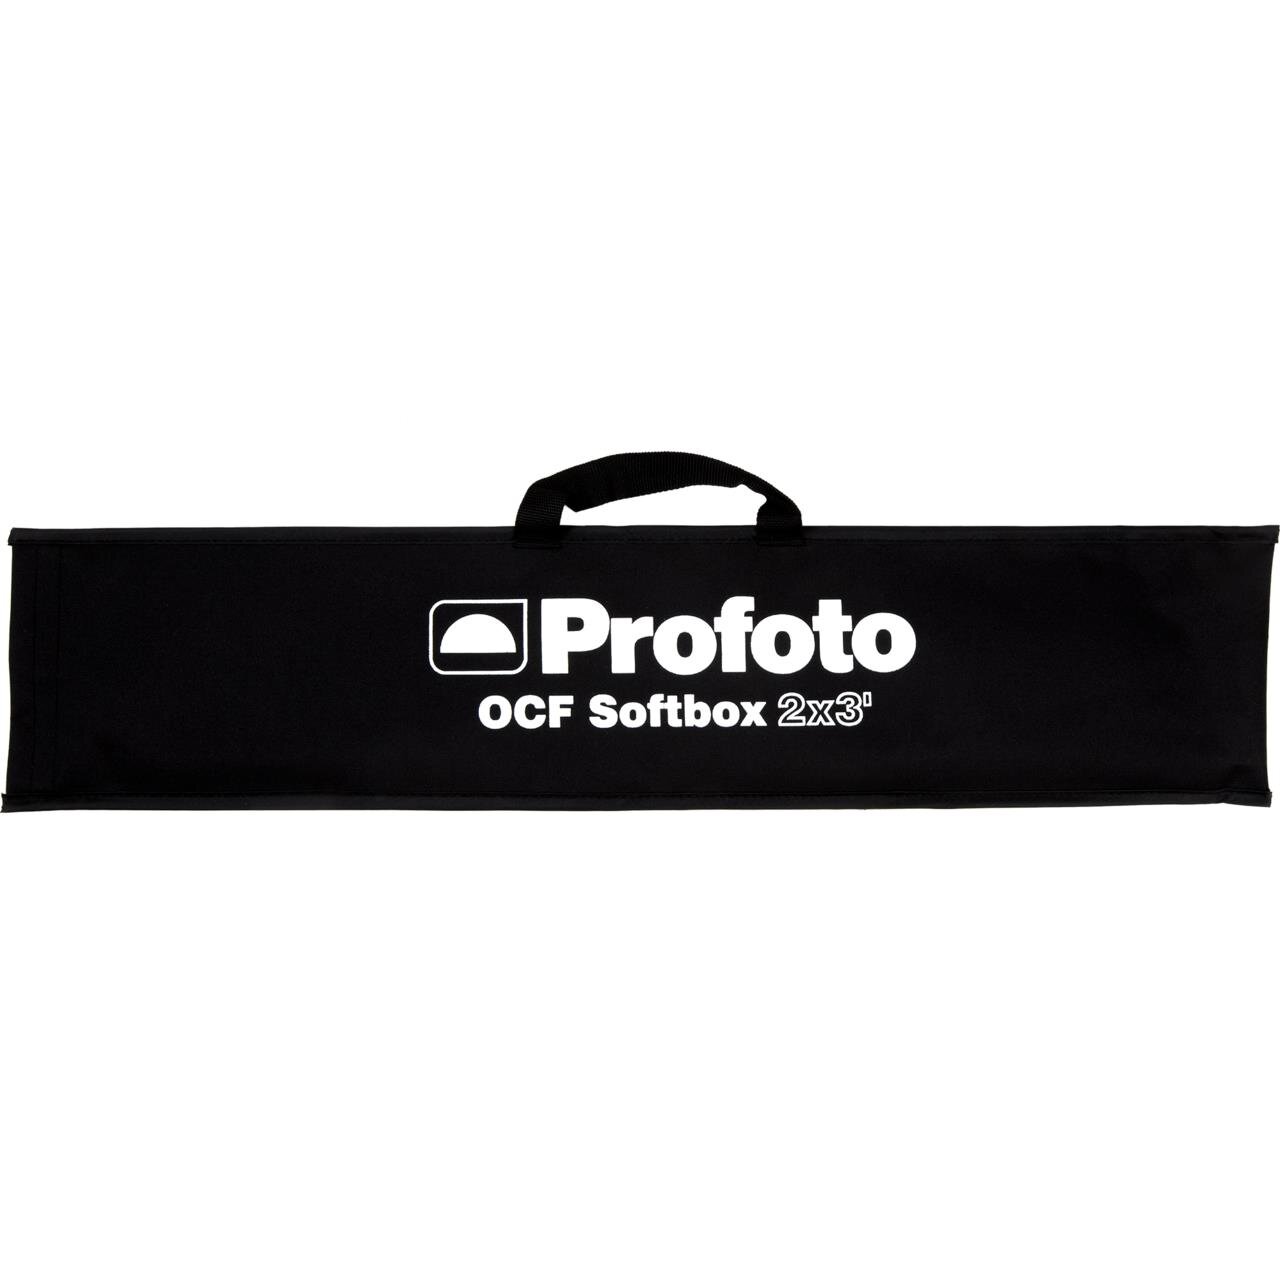 101215_f_profoto-ocf-softbox-2x3-bag_productimage.png.jpeg